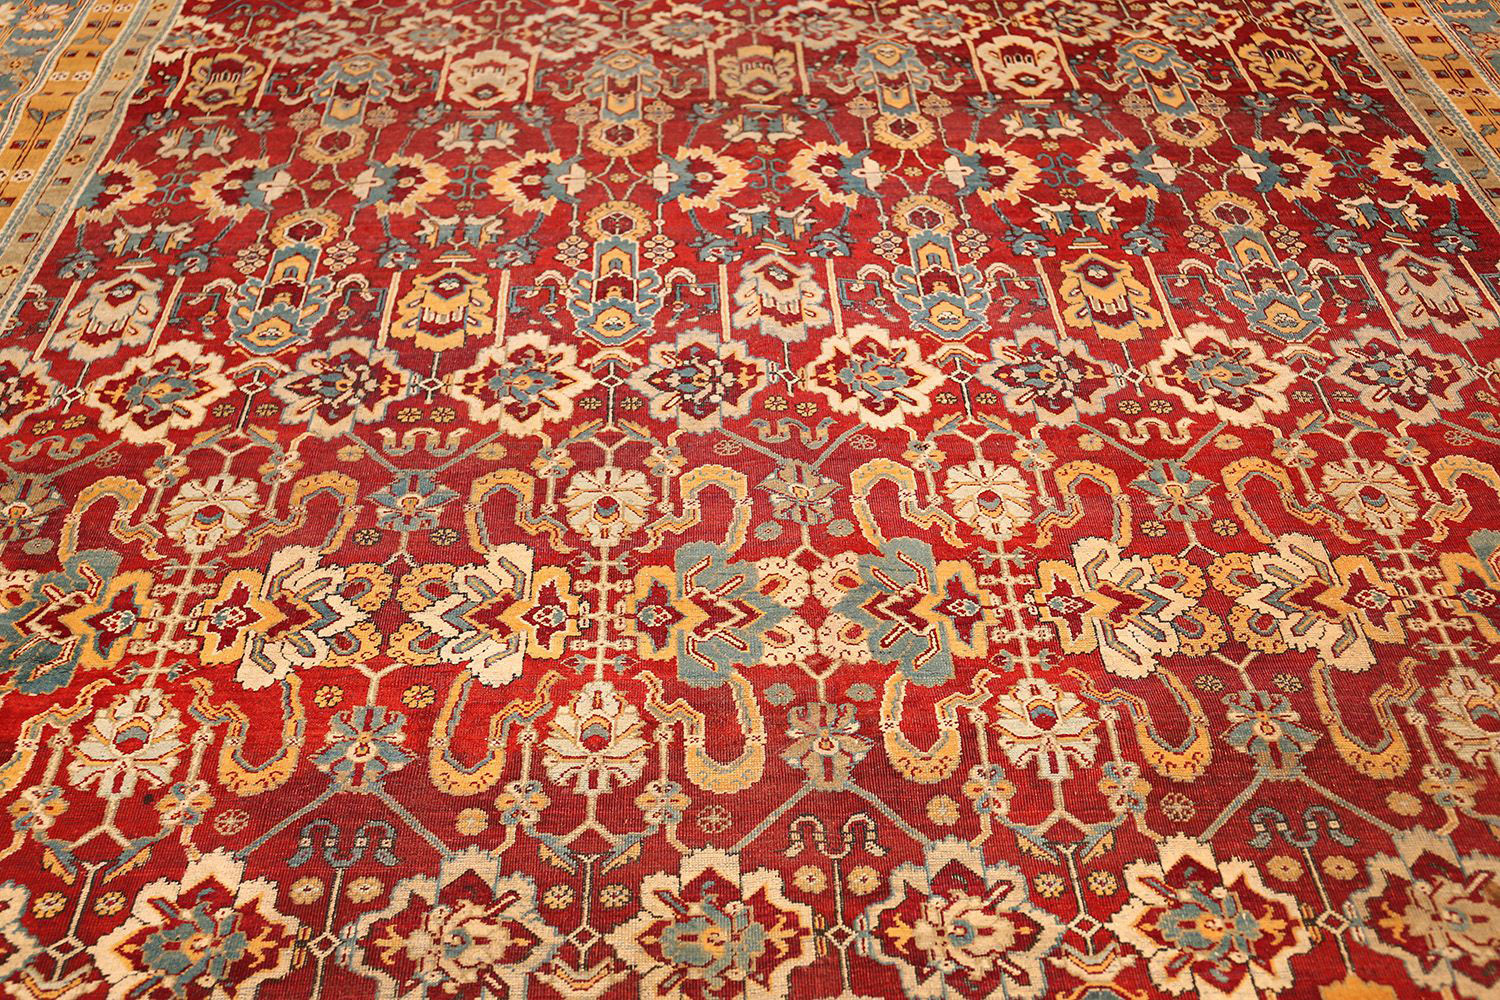 Antique amritsar Carpet - # 53052